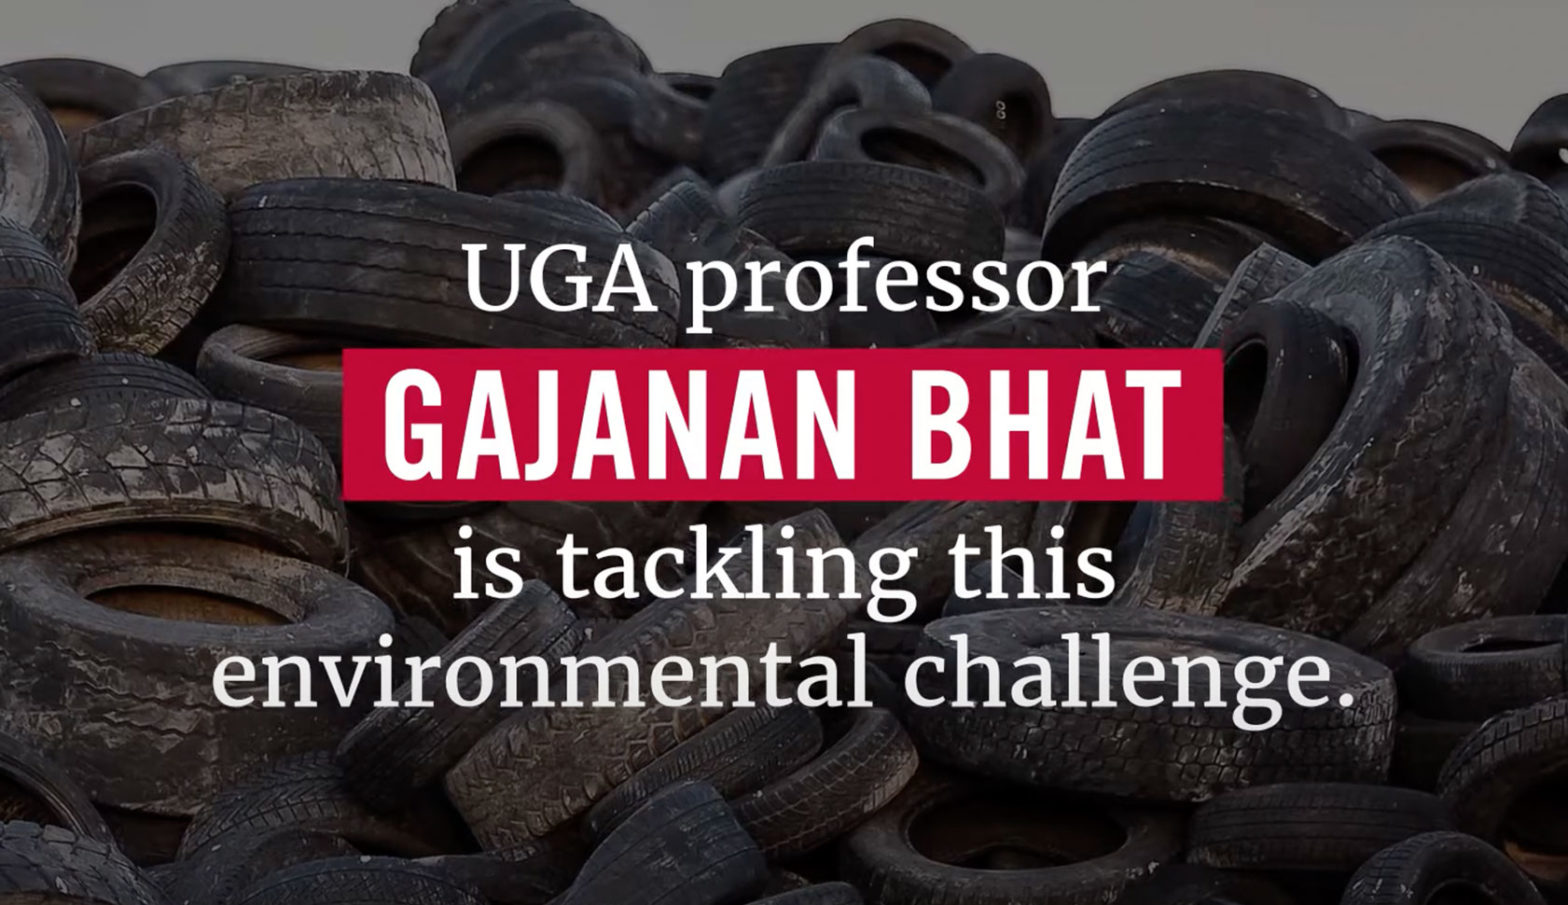 Title slide to video: UGA professor Gajanan Bhat is tackling this environmental challenge